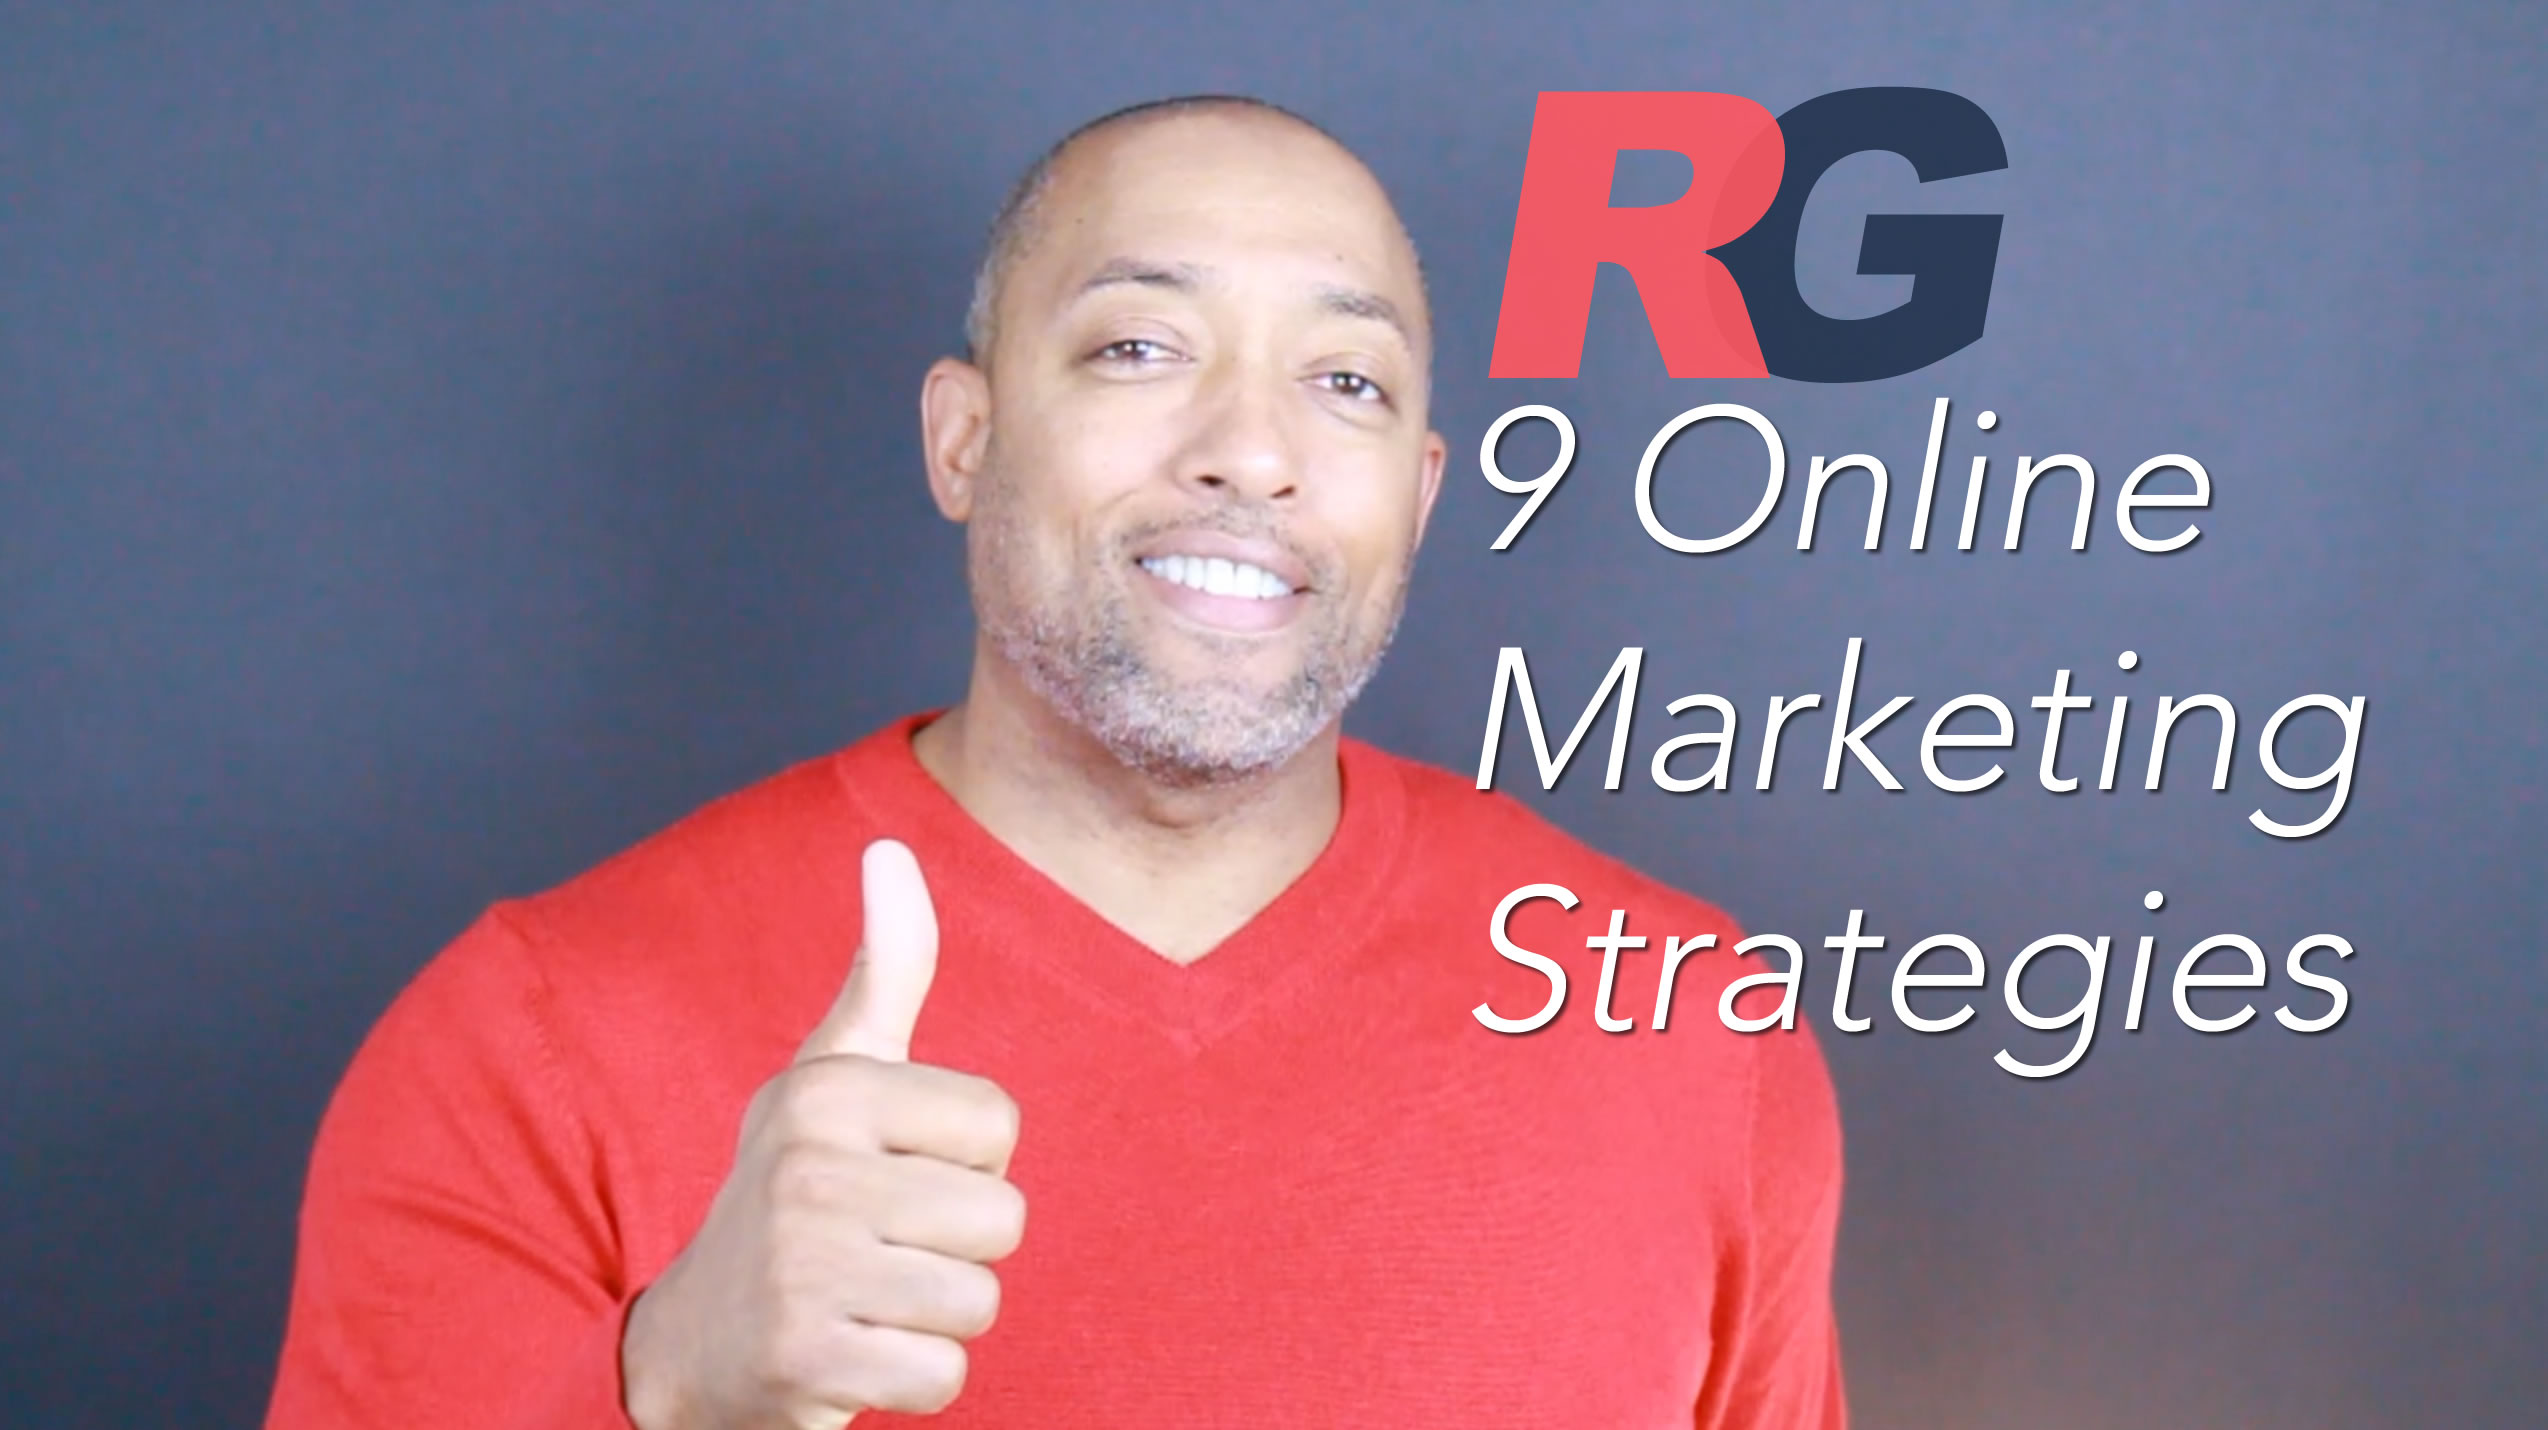 Top 9 Online Marketing Strategies (Video)